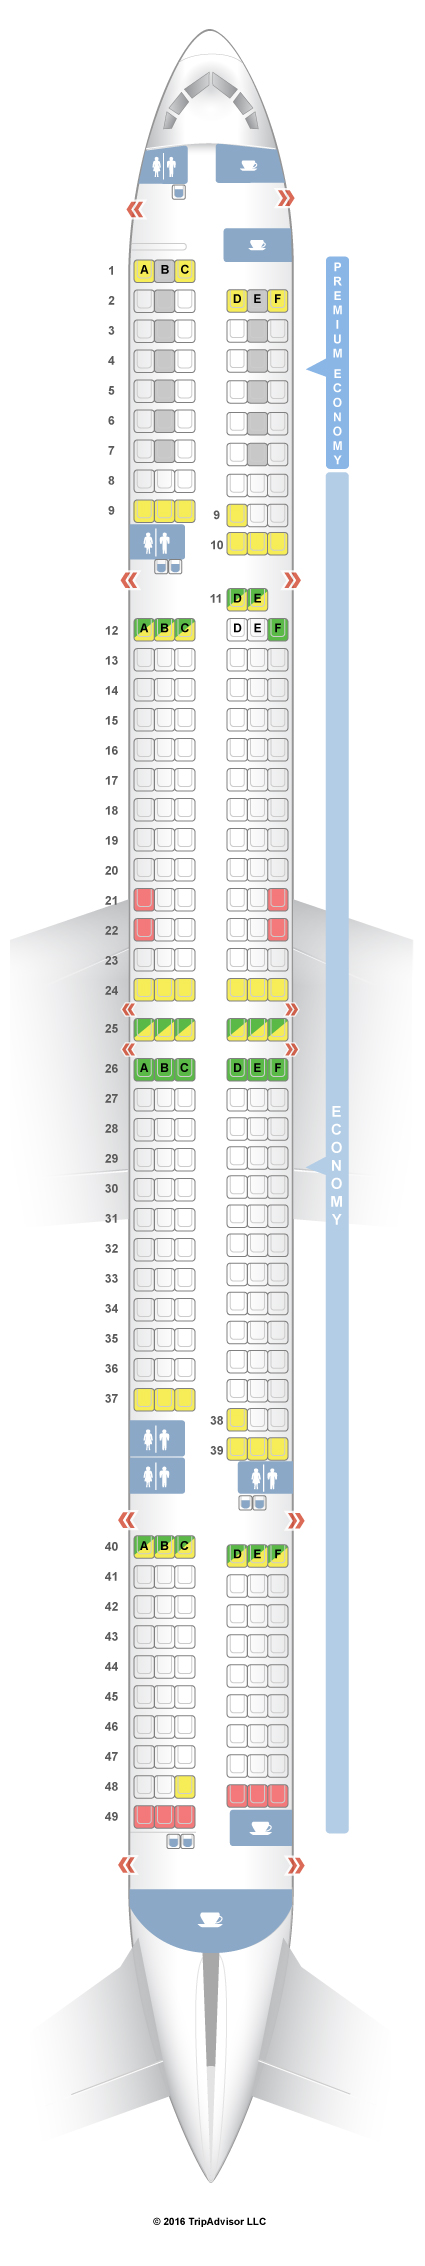 Boeing 757 Narrow Body Jet Seating Chart